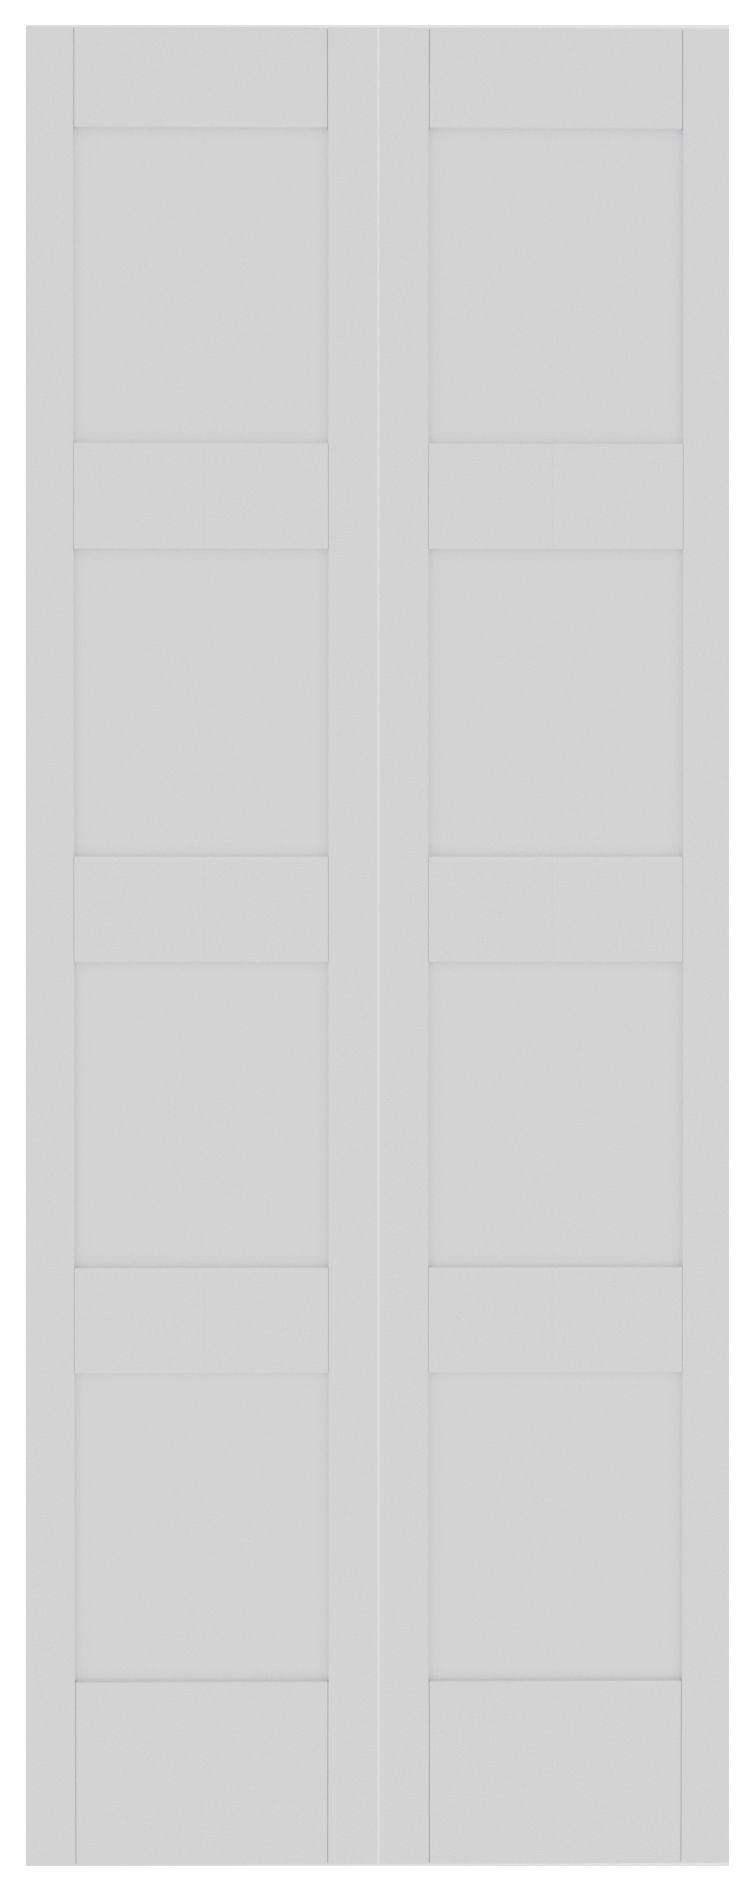 Wickes Marlow 4 Panel Shaker White Primed Solid Core Bi-Fold Door - 1947mm